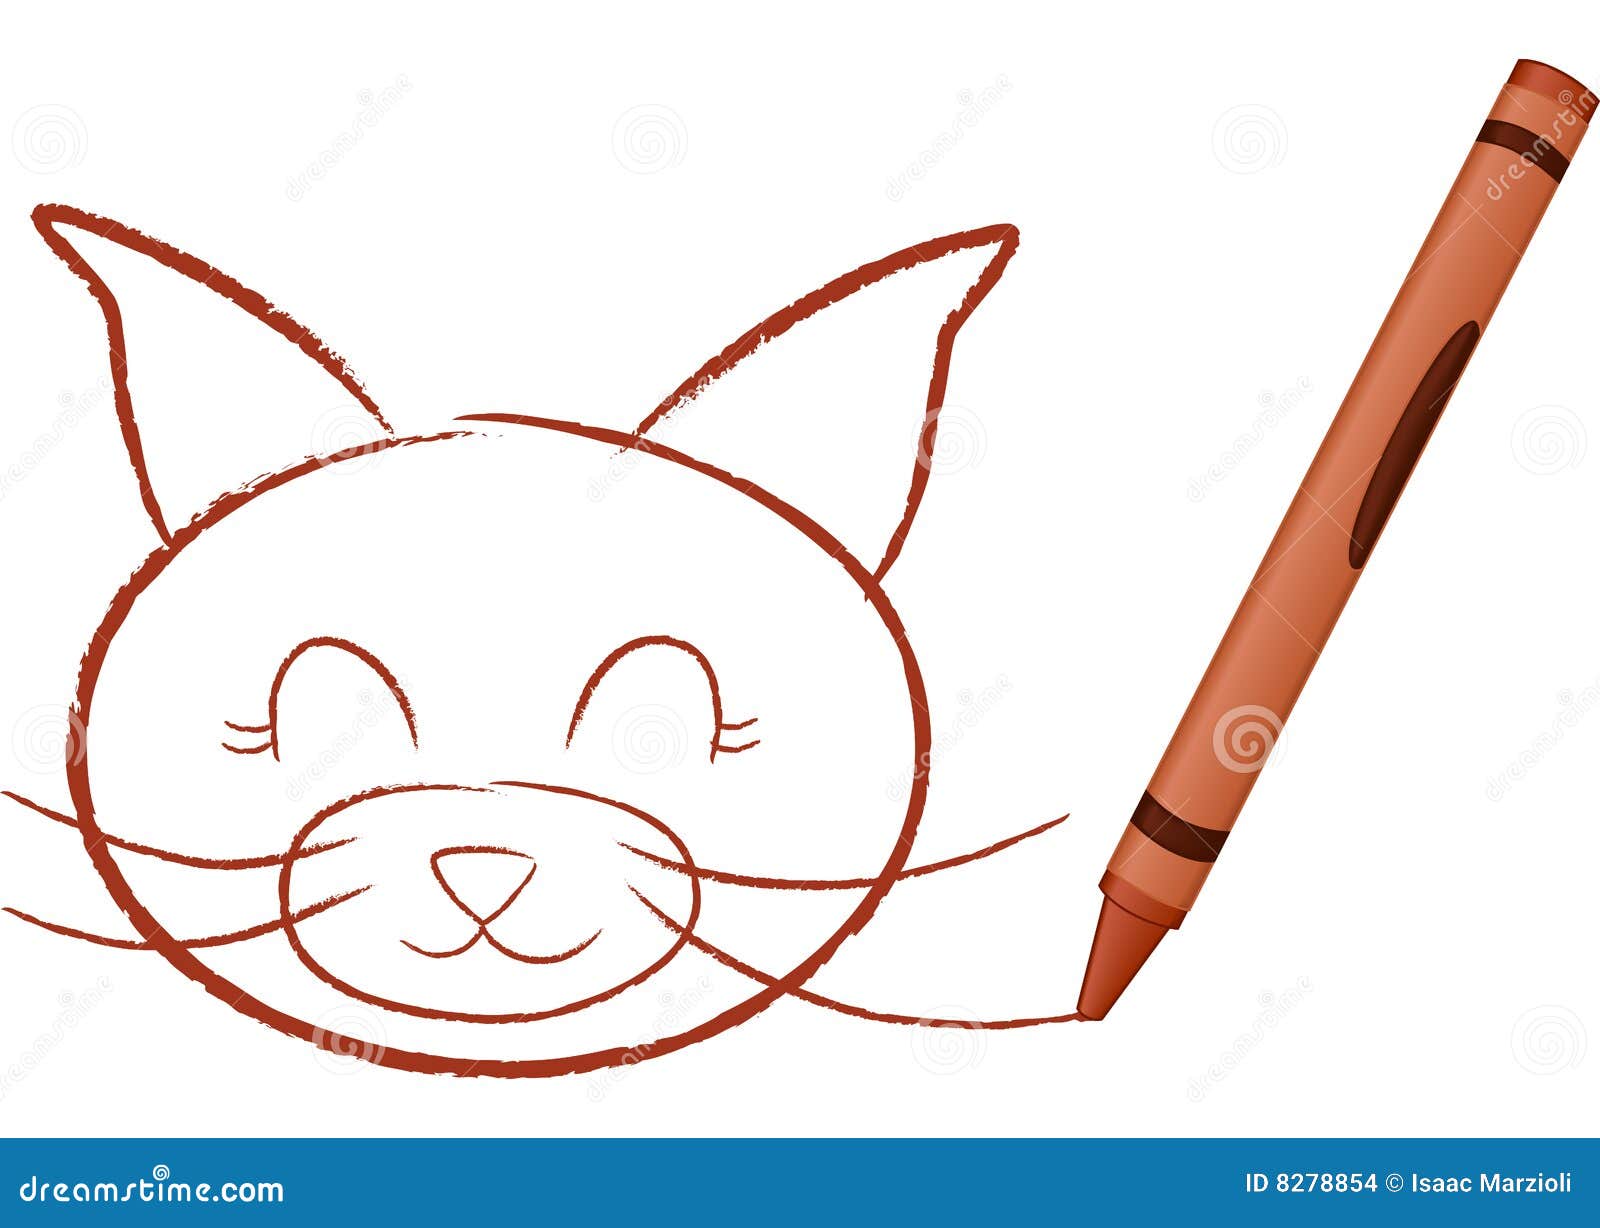 crayon drawn cat